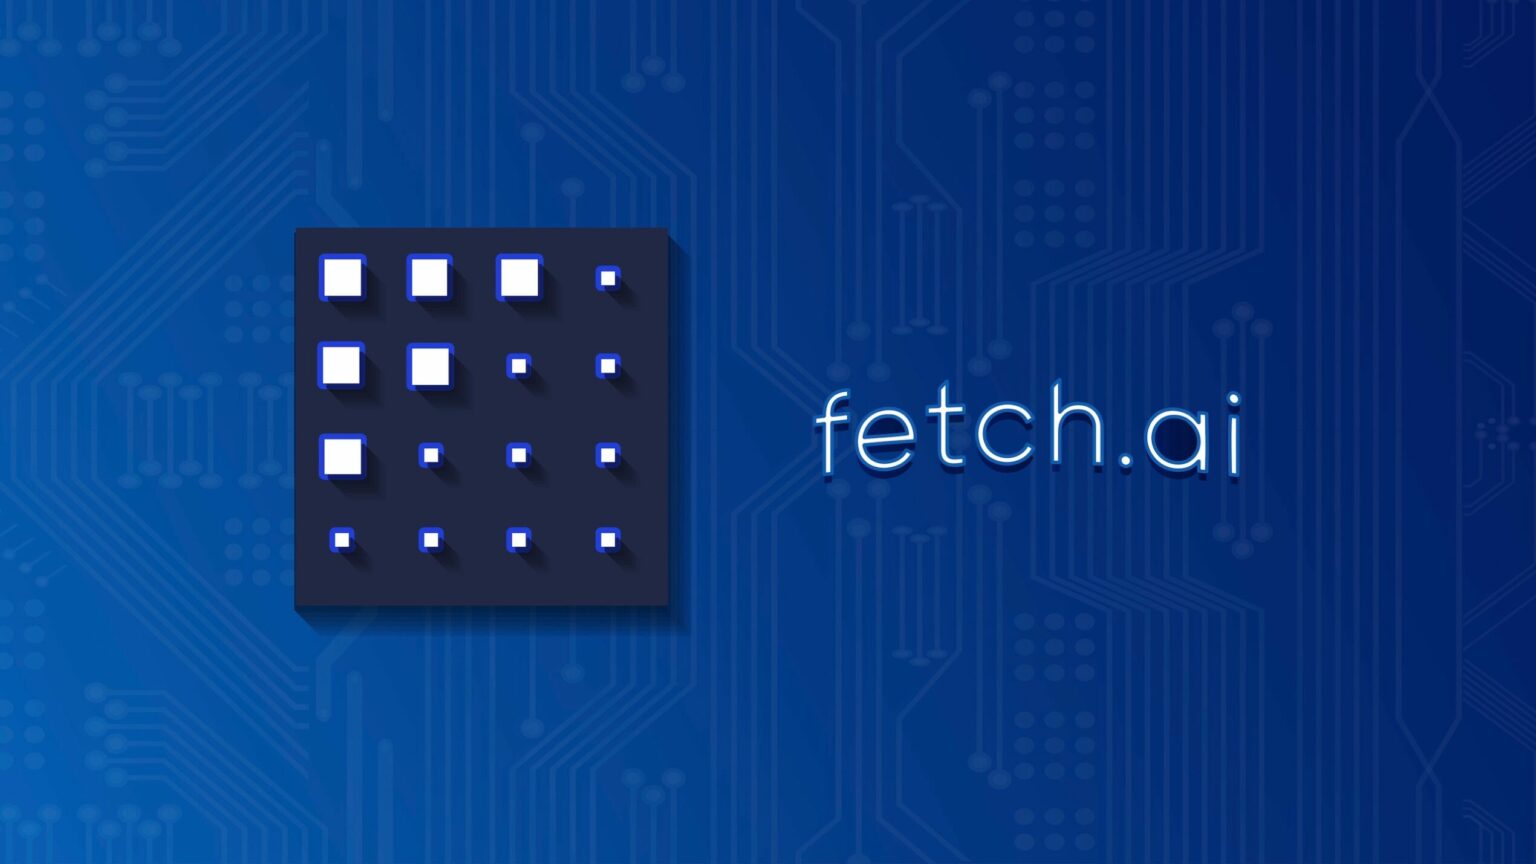 Fetch.ai (FET) Shoots Up More Than 500% Amid February Gains